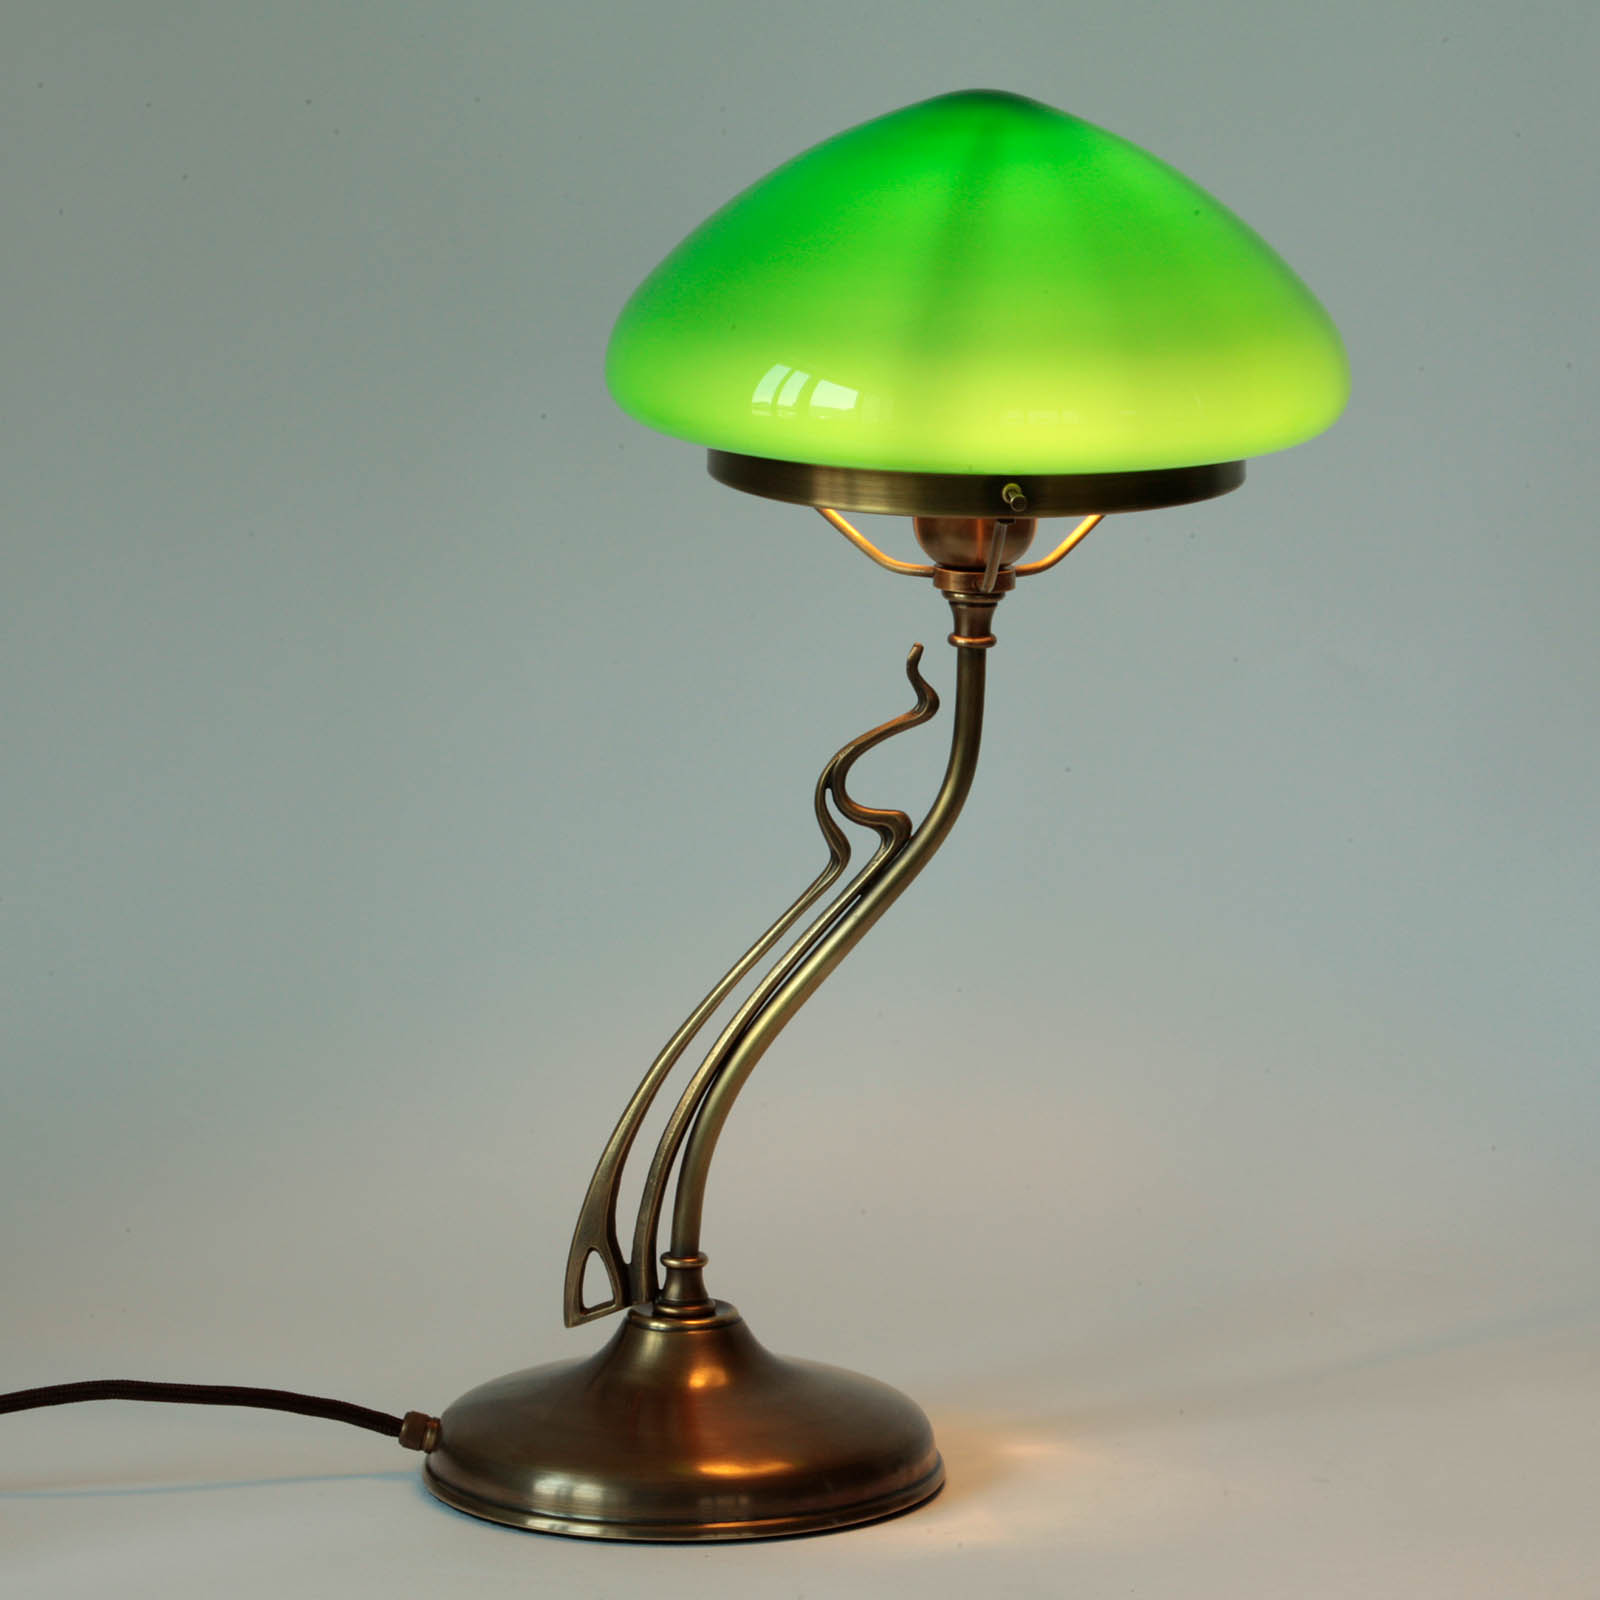 Art Nouveau "Mushroom" Table Lamp with Curved Brass Frame: Abgebildet in antik handpatiniert (Altmessing) und smaragdgrünem Glas